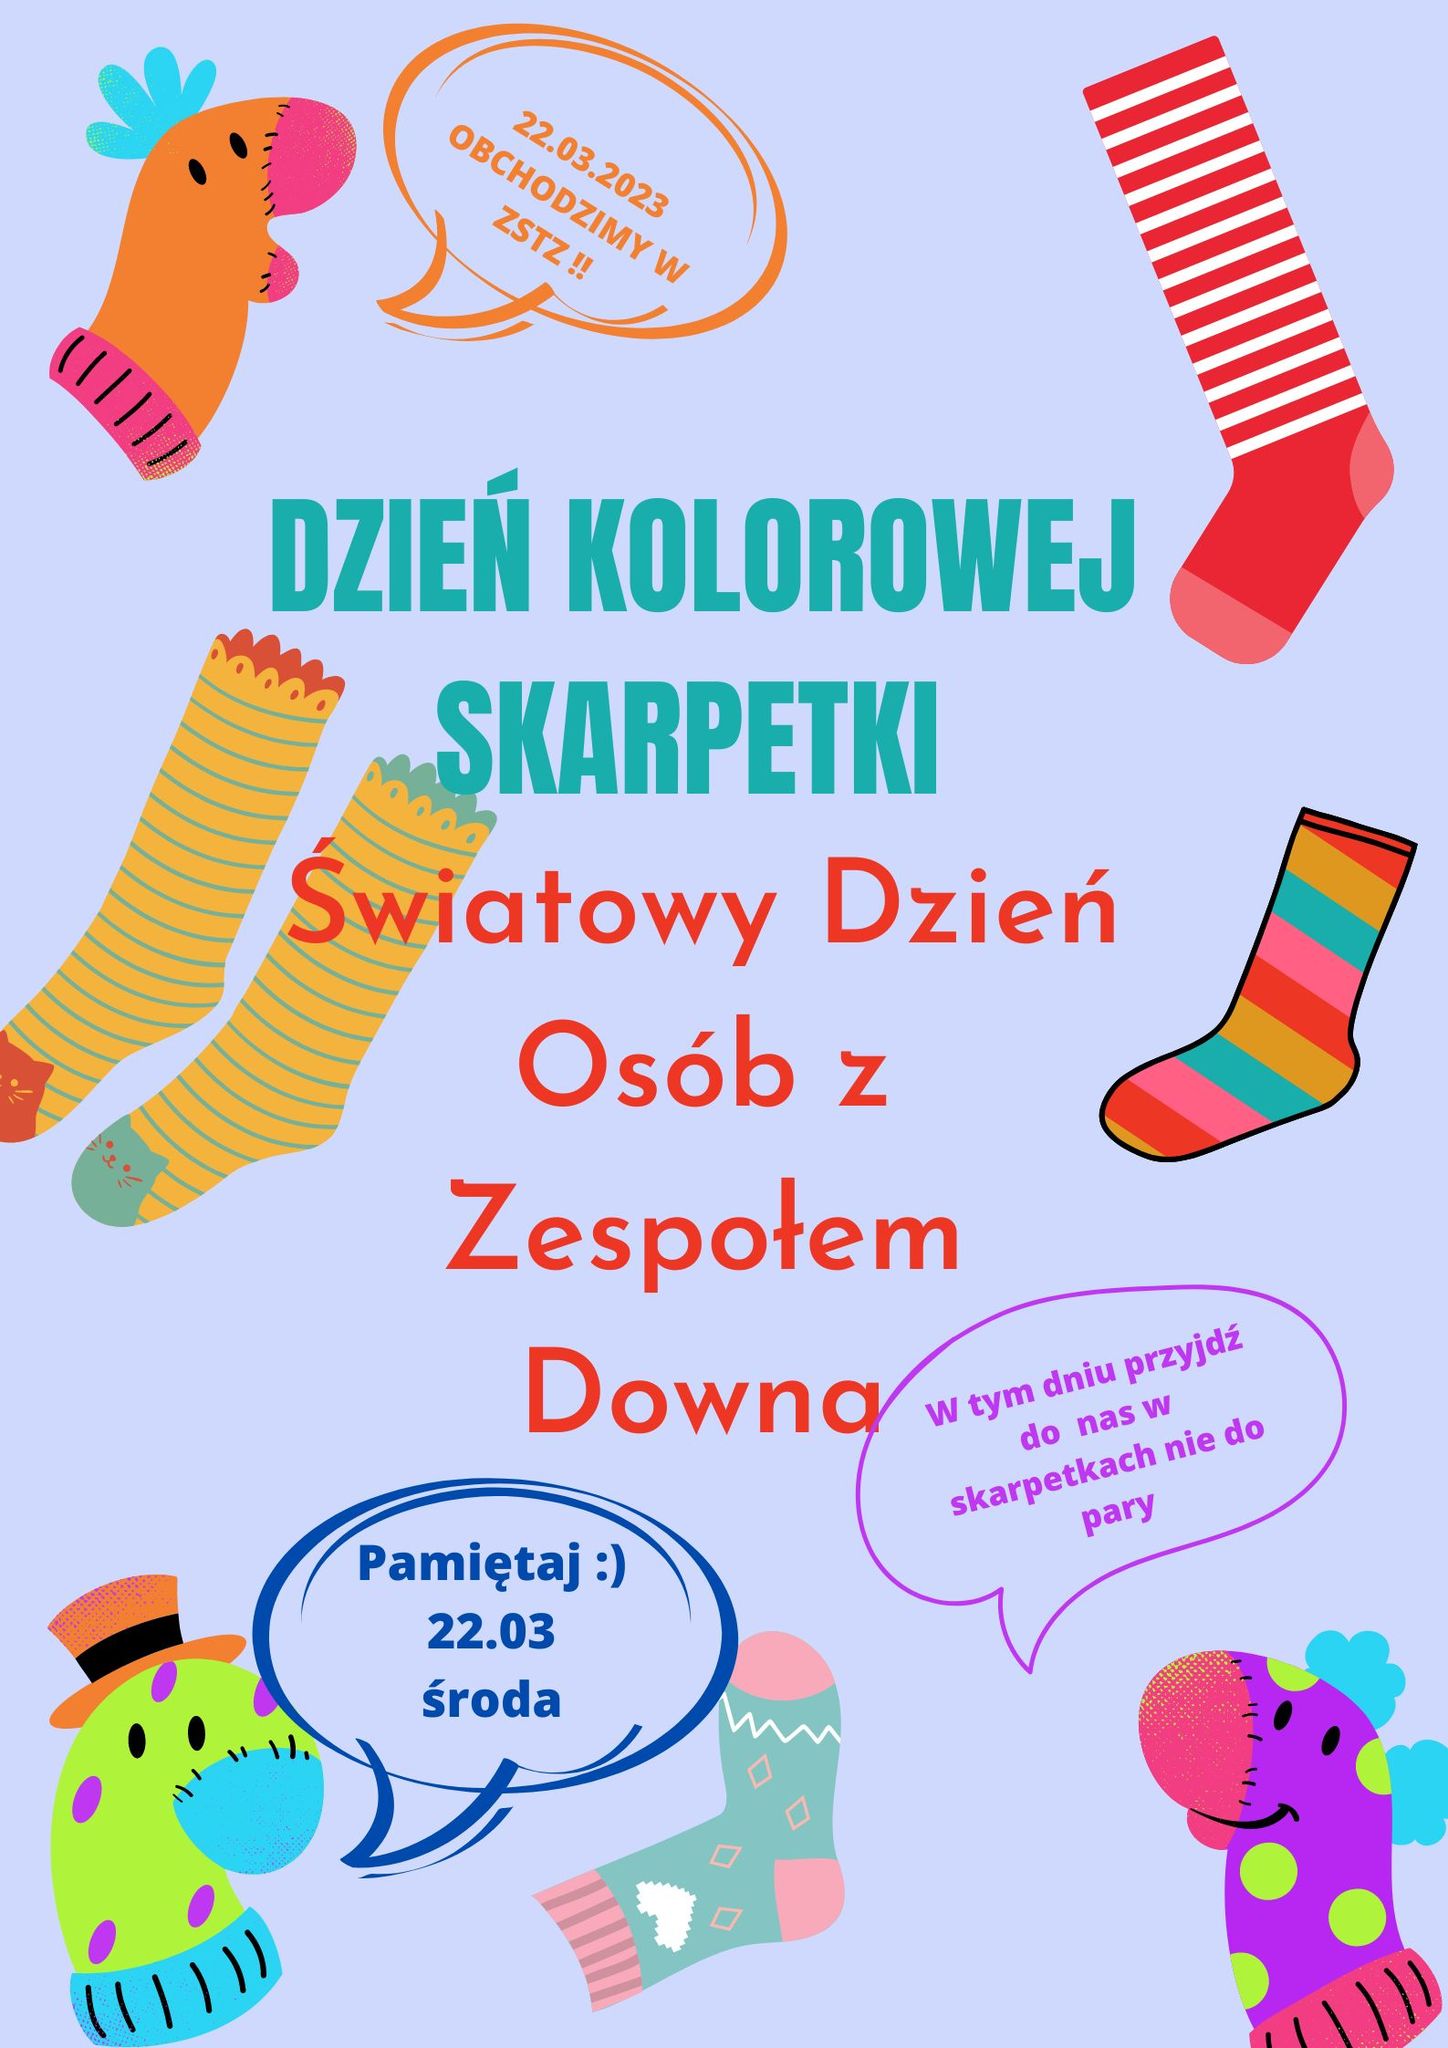 You are currently viewing Dzień Kolorowej Skarpetki